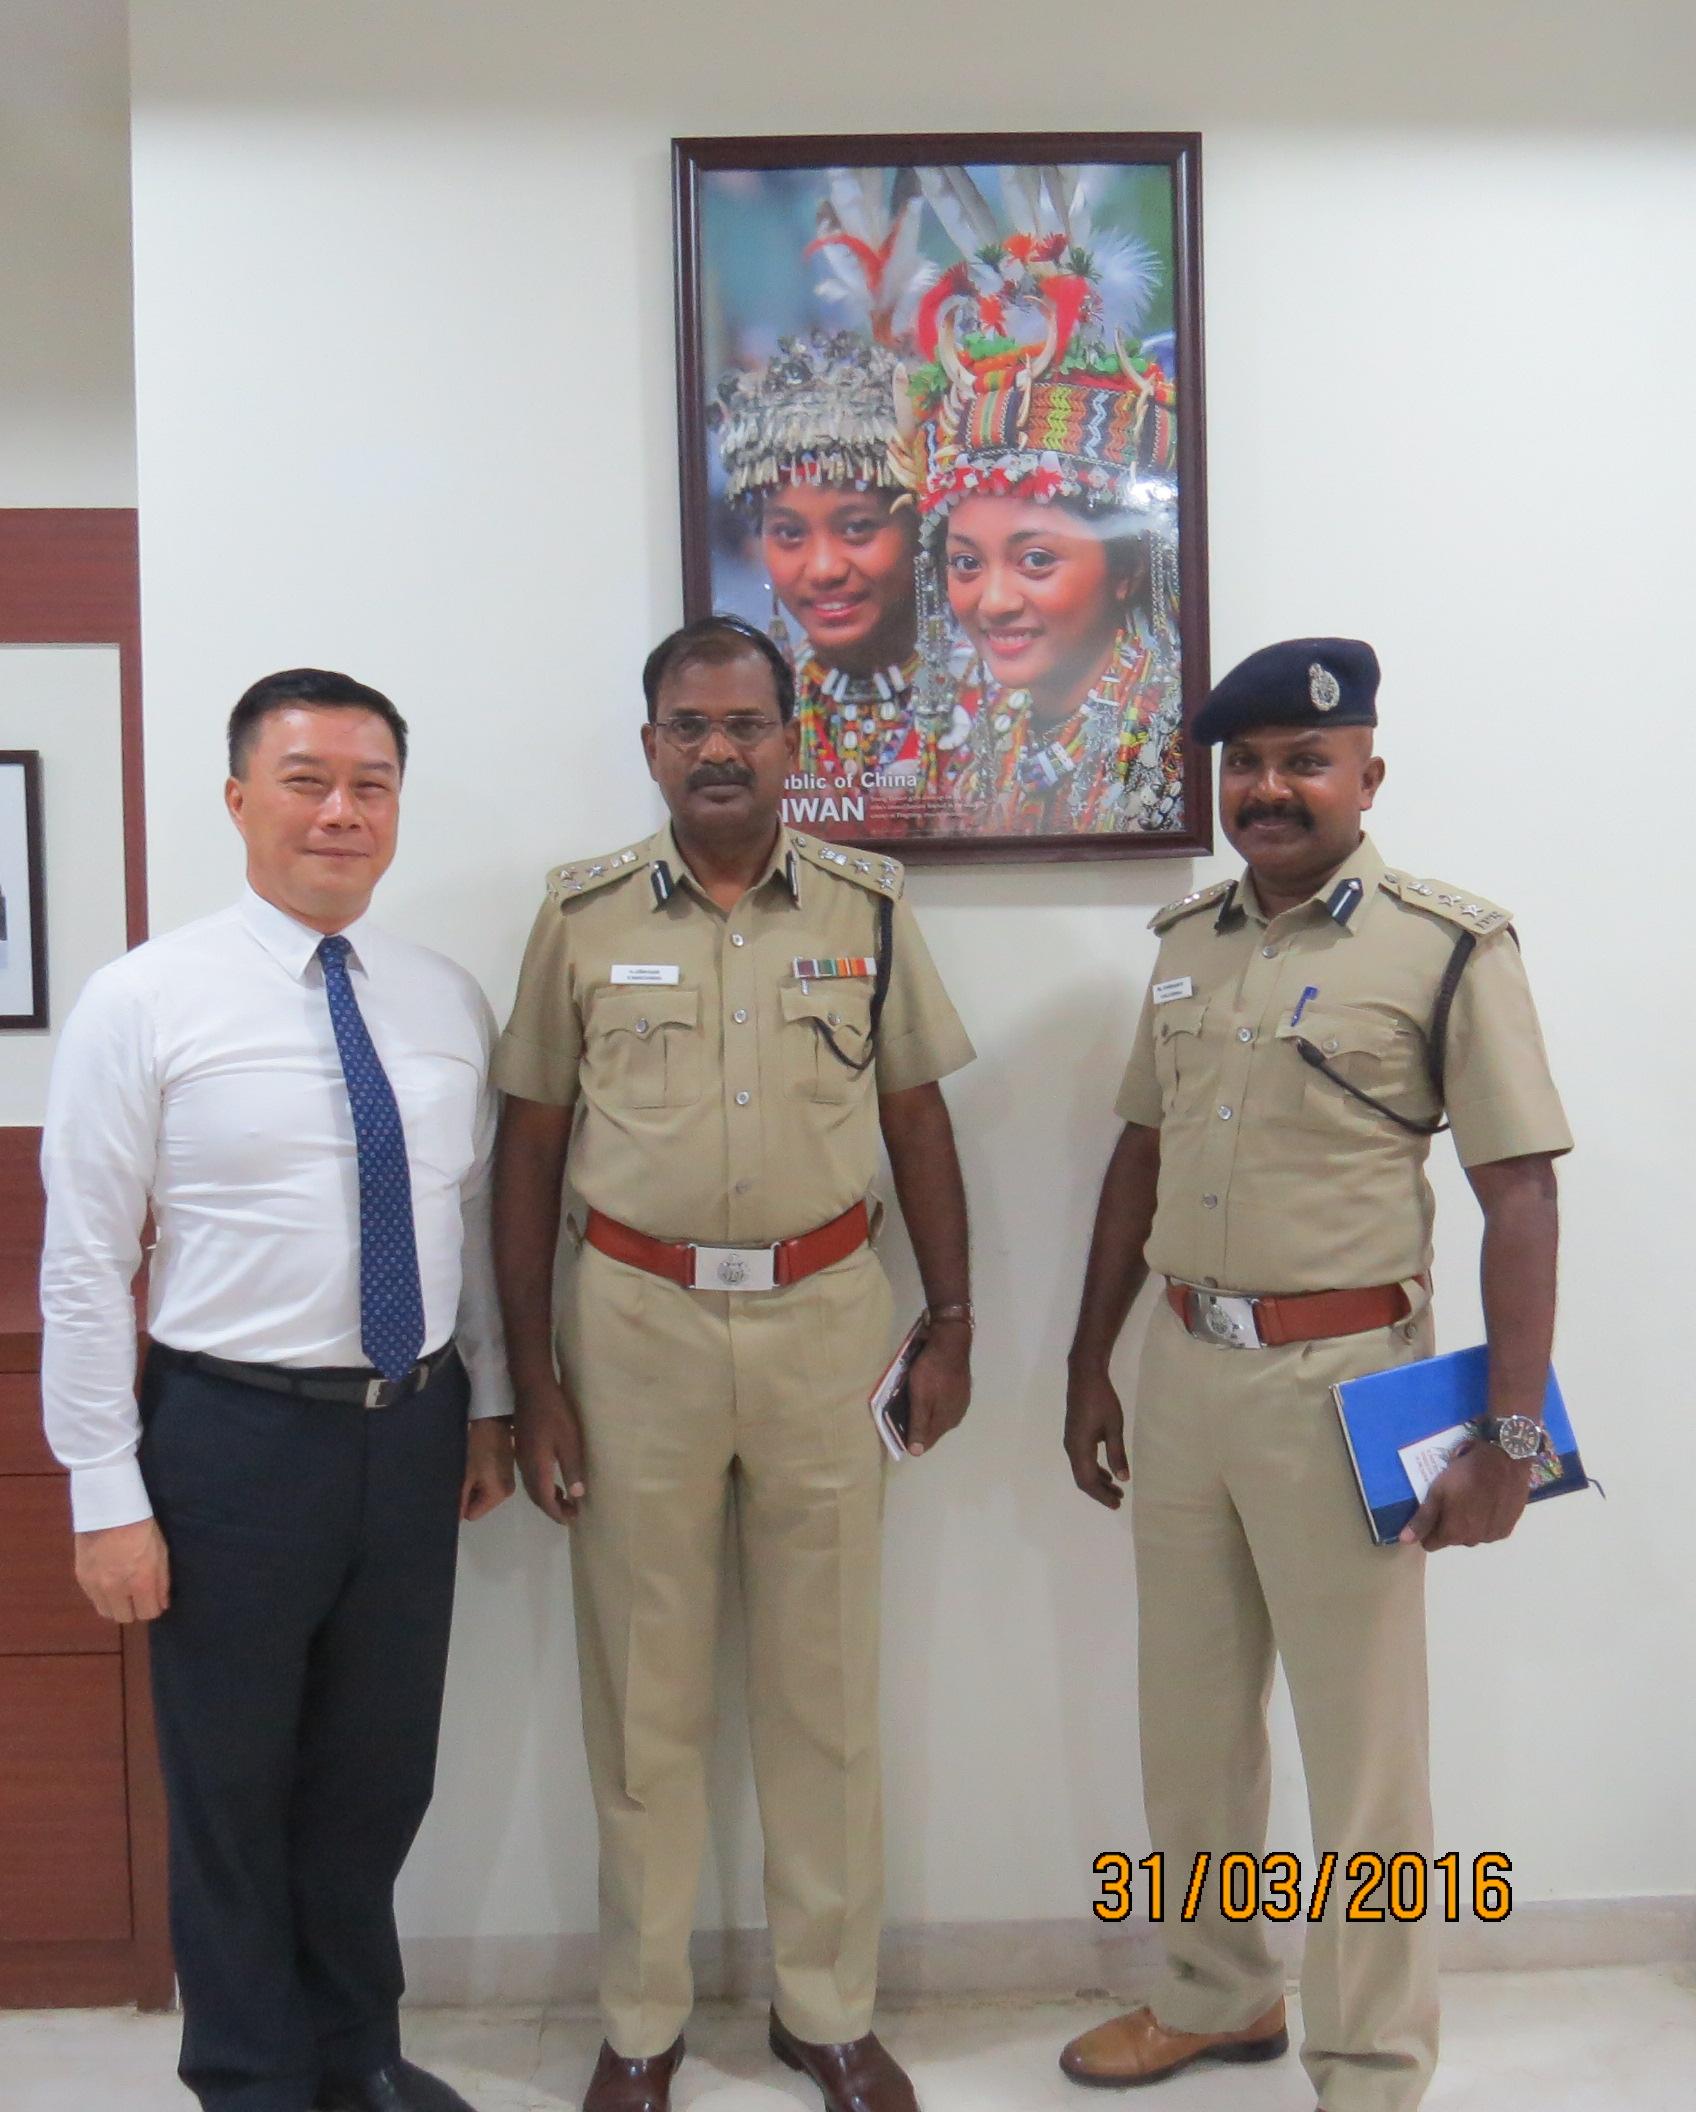 Director General Charles Li(L)
Mr. Manoharan(Center)
Mr. V. Balakrishnan(R)
